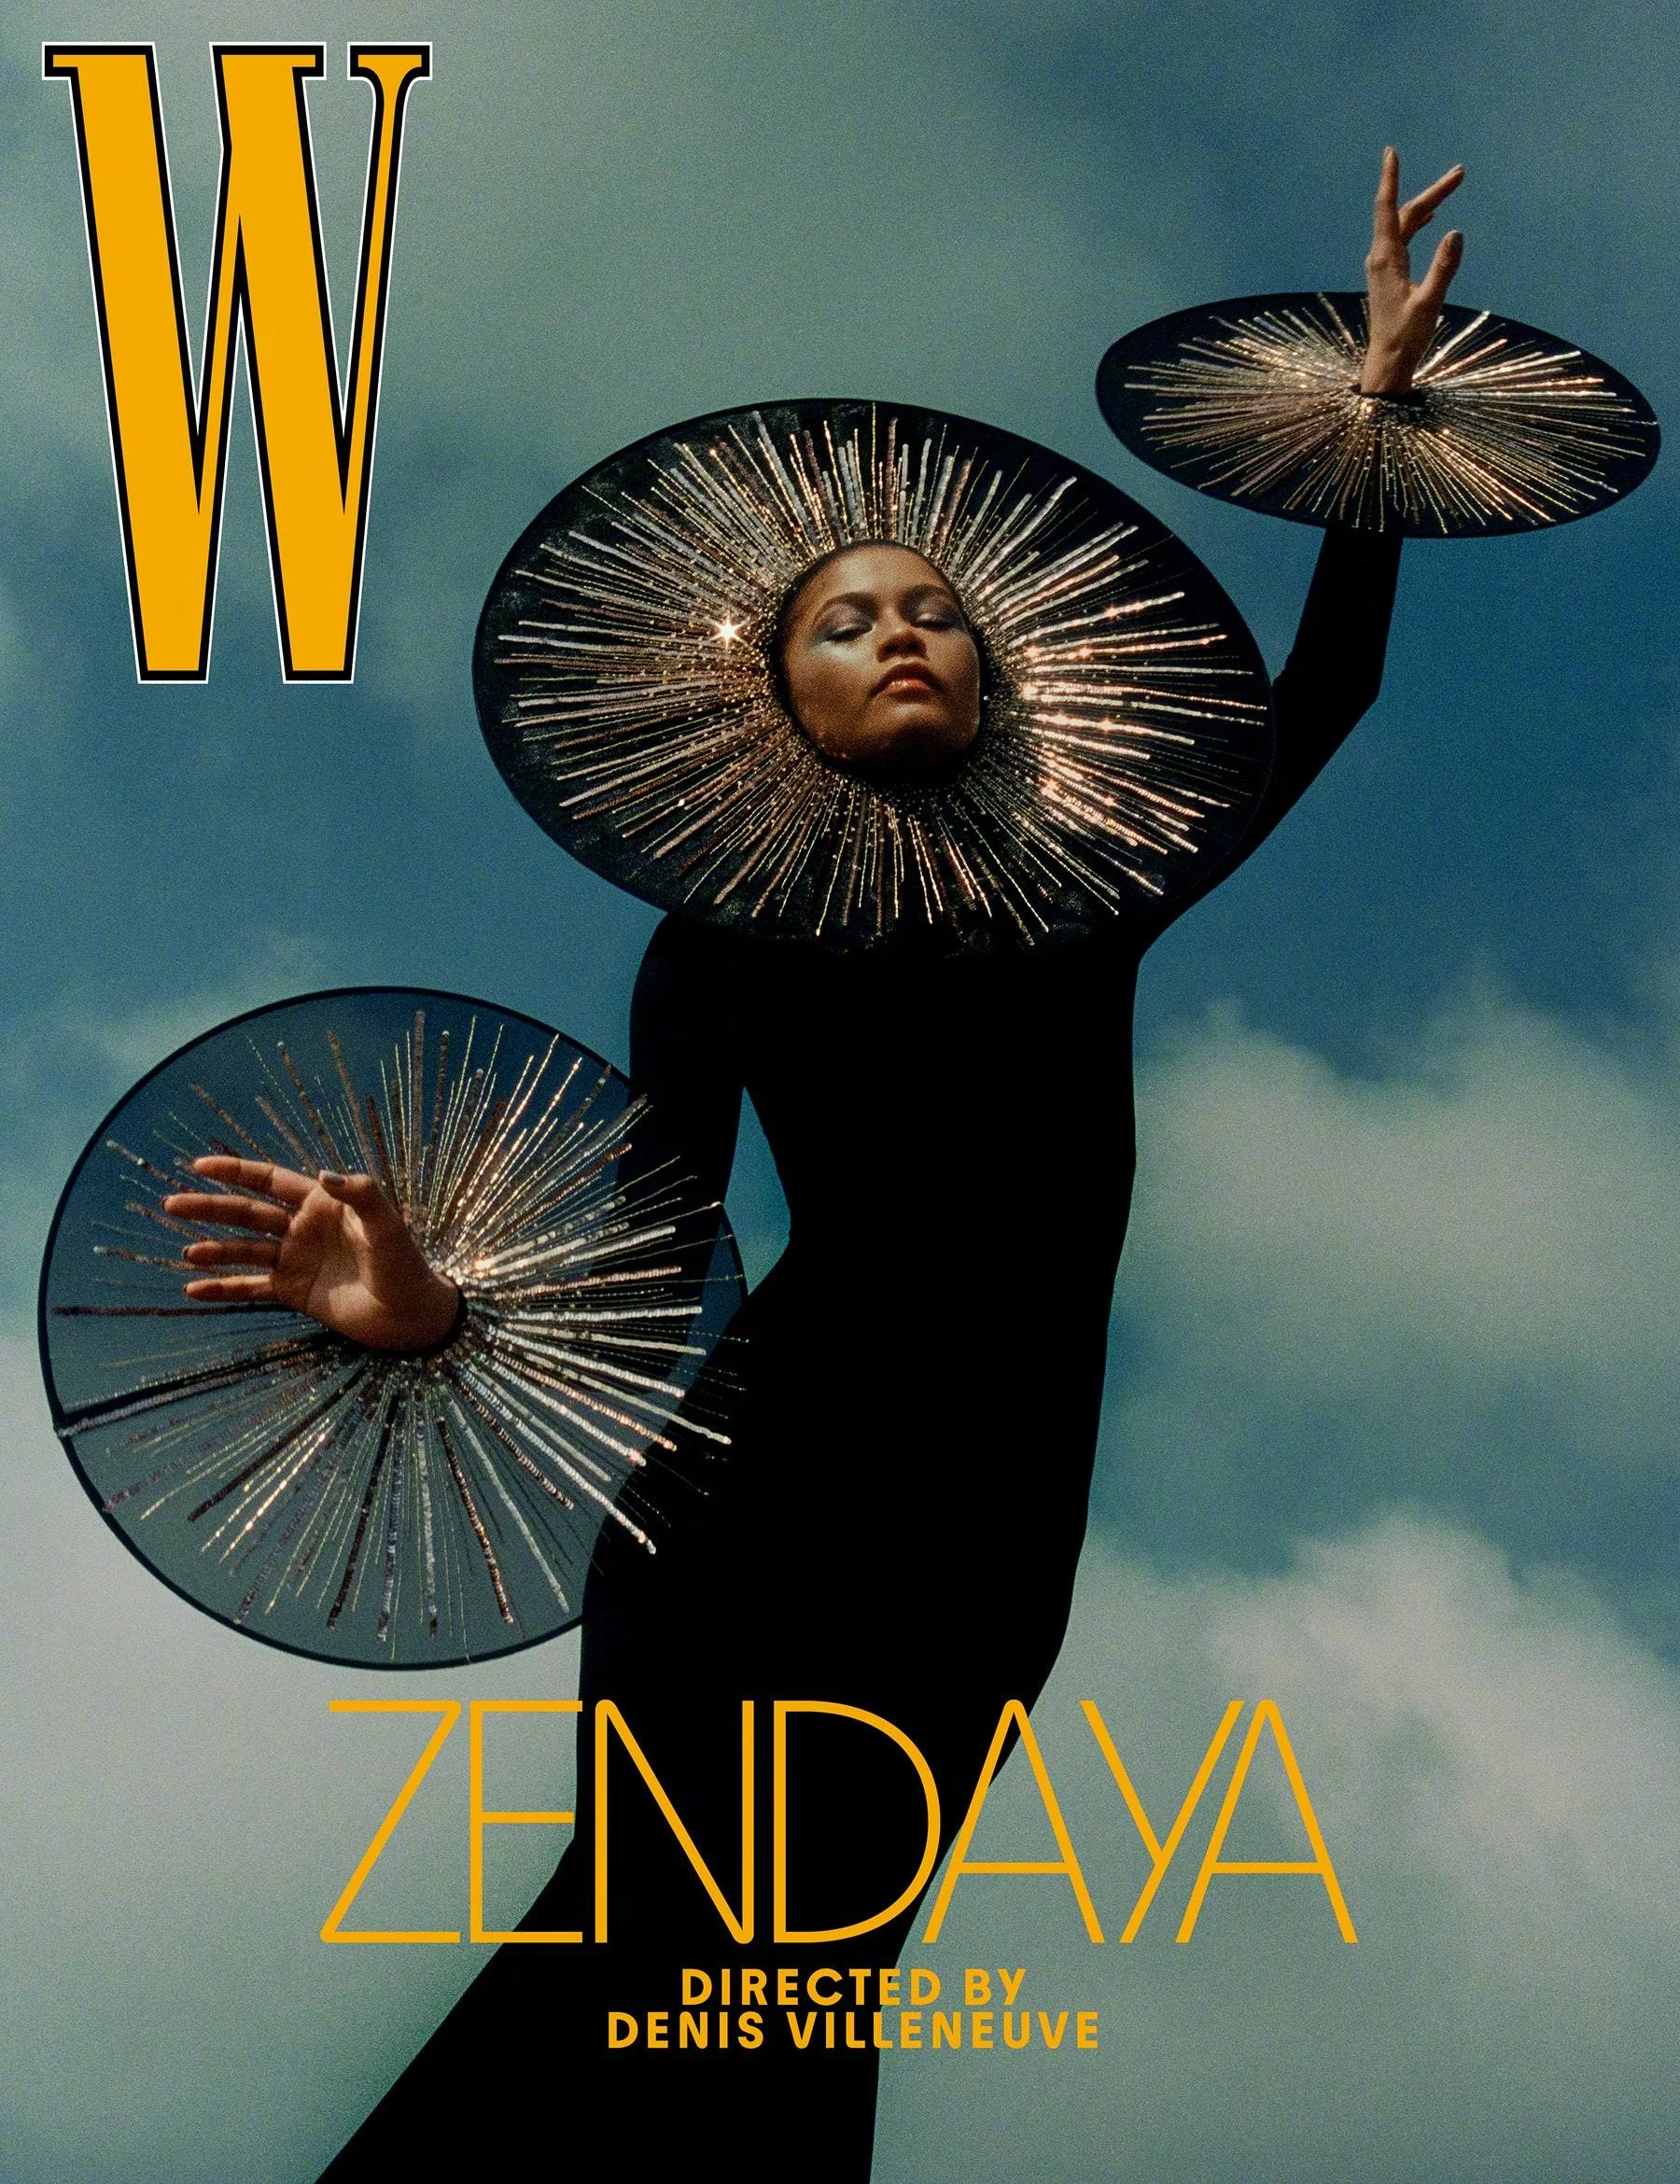 Zendaya, "W" magazine director's special issue "Future Humanity" photo